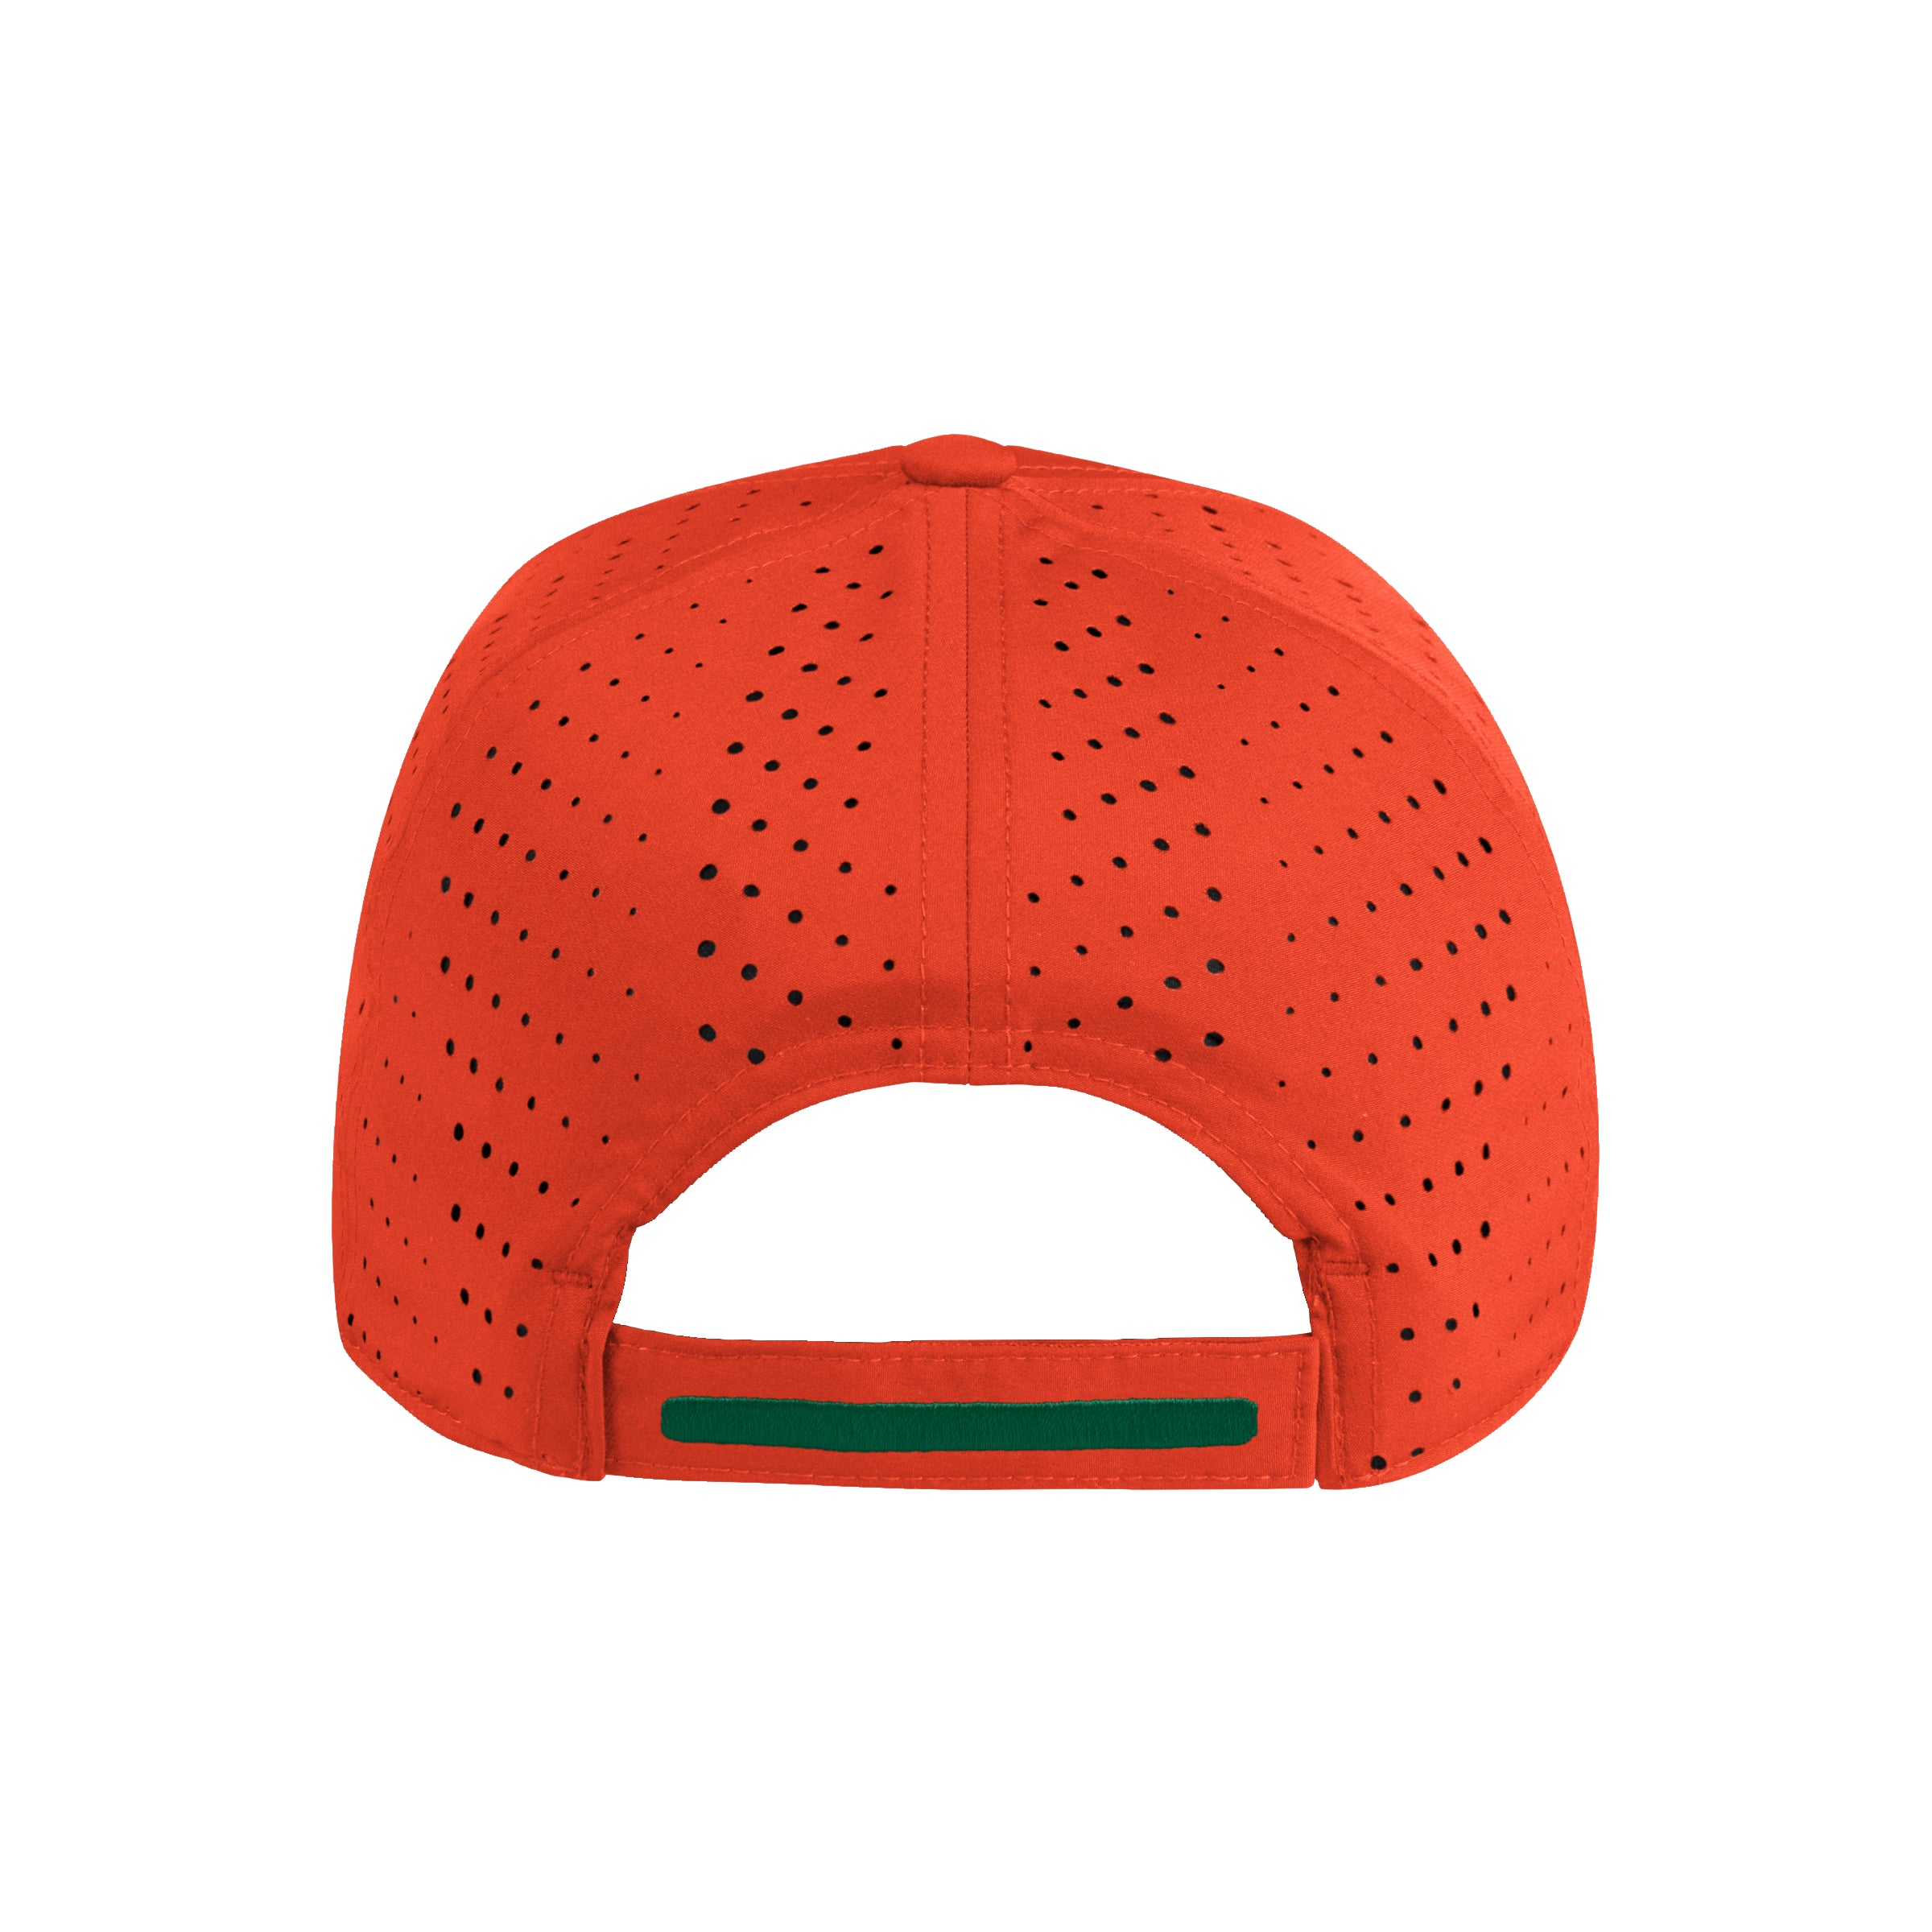 Miami Hurricanes adidas Structured Perforated Adjustable Hat - Orange